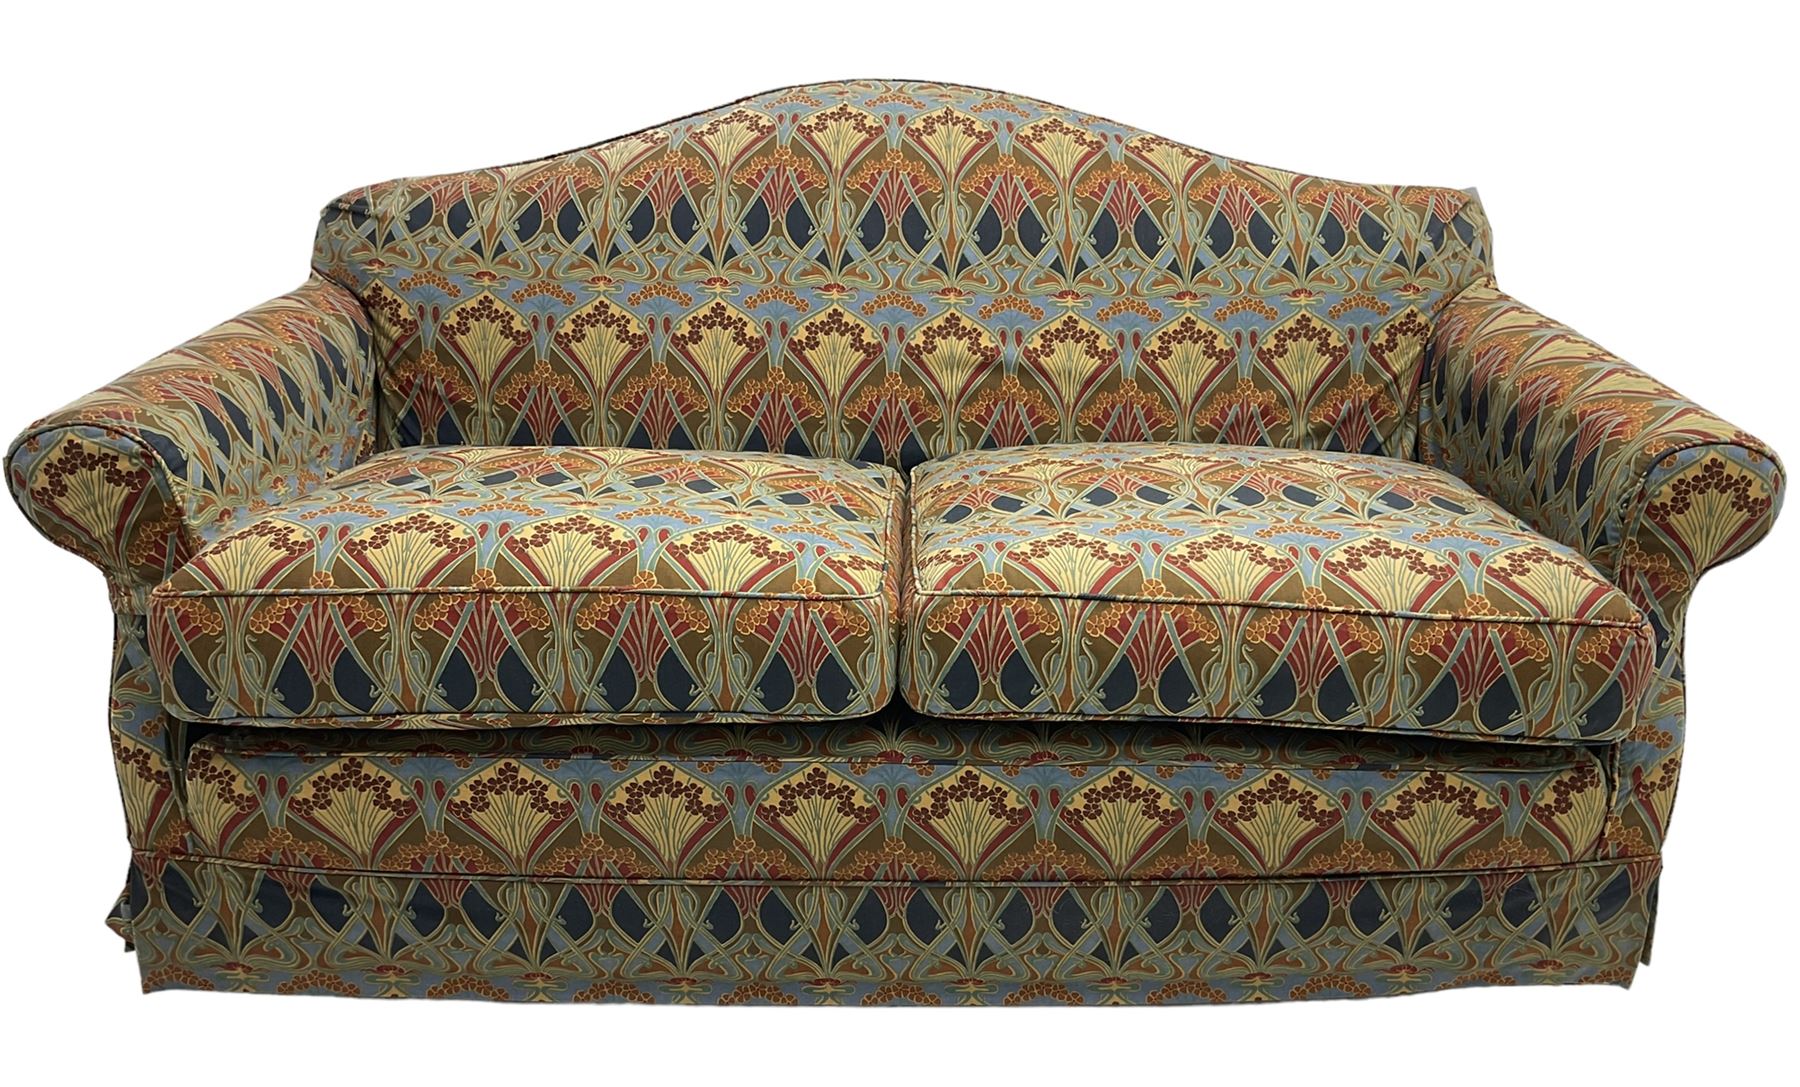 Two seat traditional shape sofa